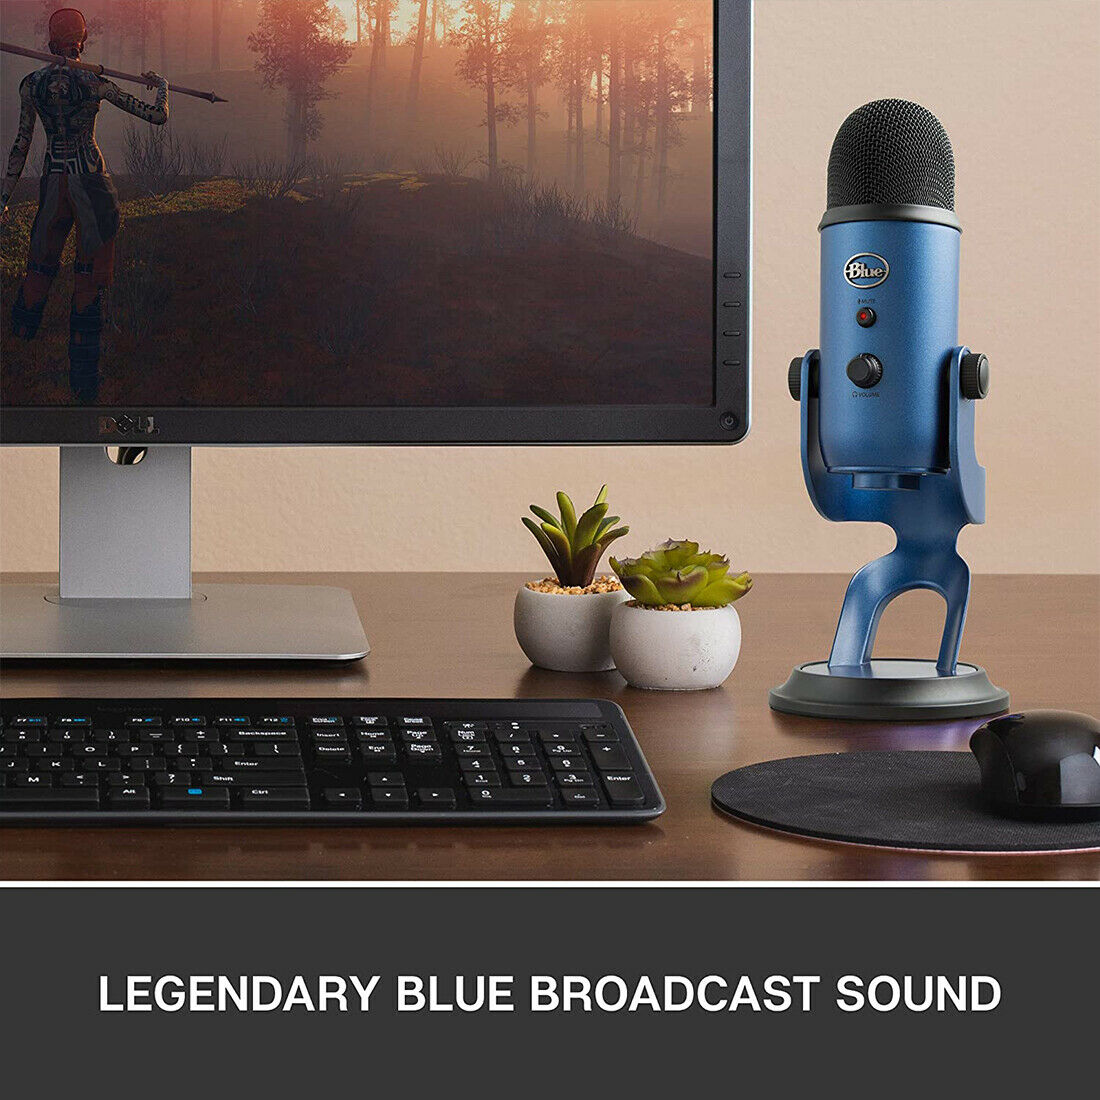 Blue Yeti Professional Multi-Pattern USB Condenser Microphone, Midnight Blue